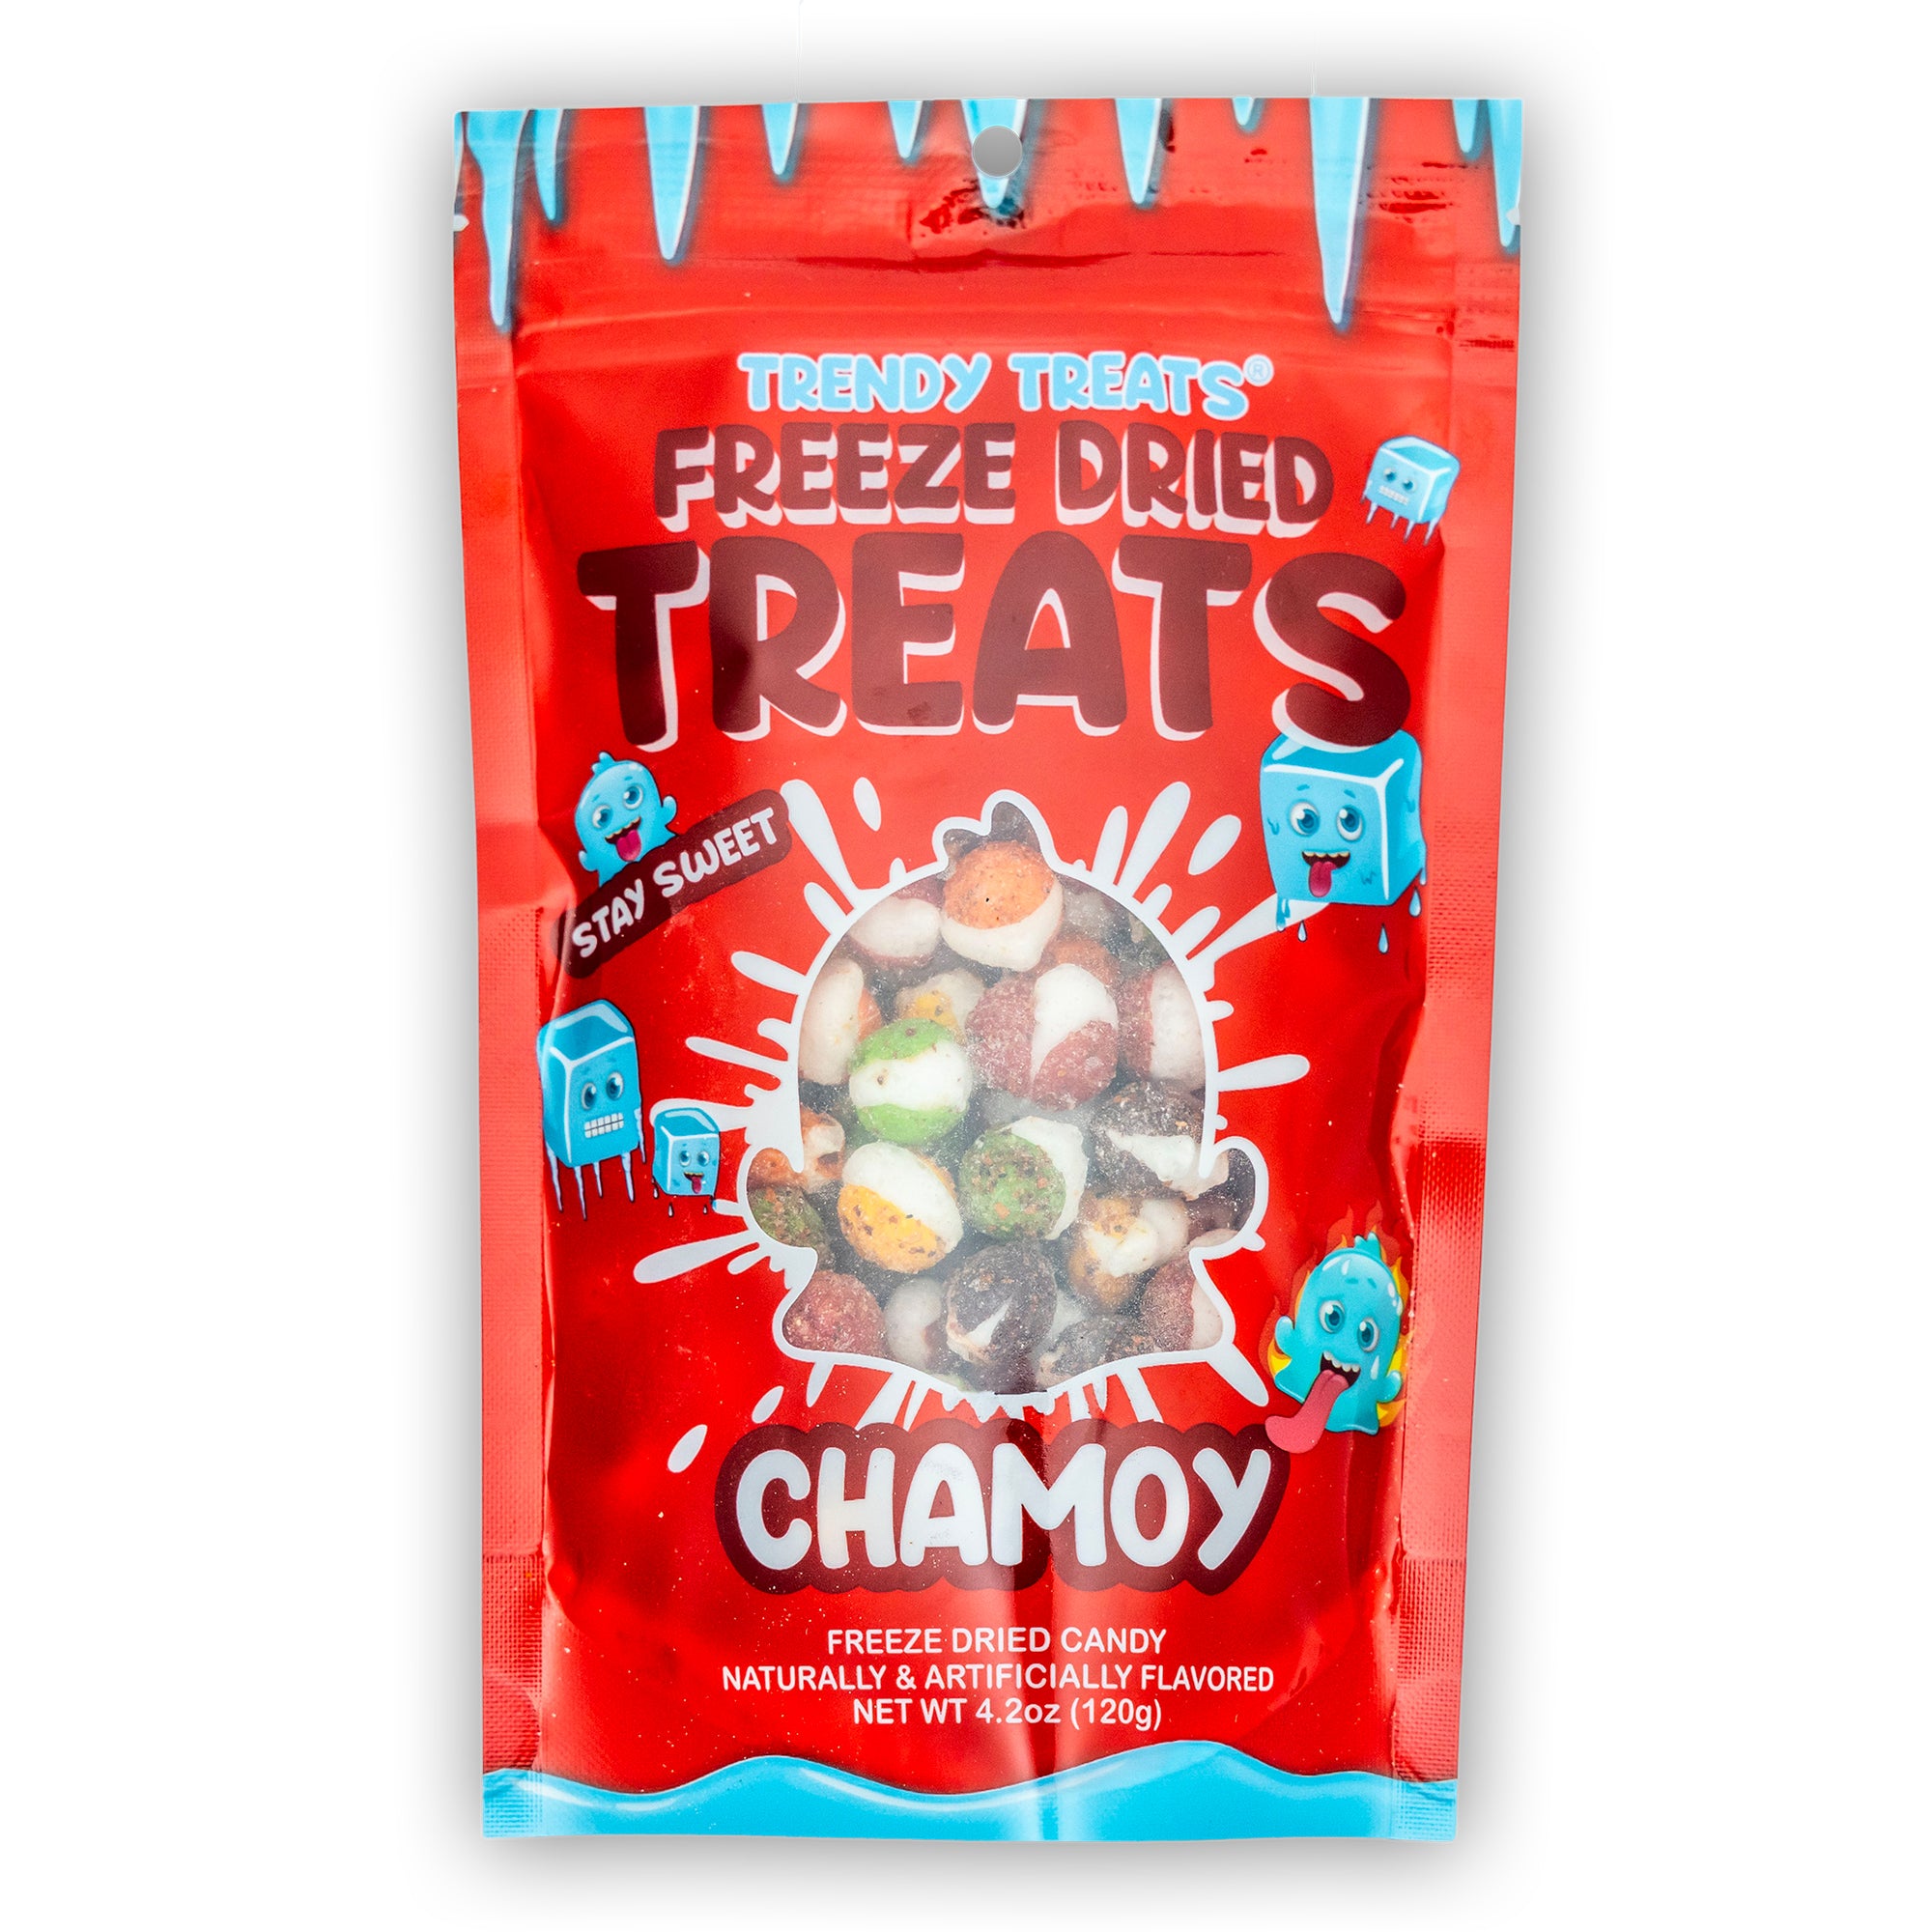 Freeze Dried Chamoy Rainbow Candy